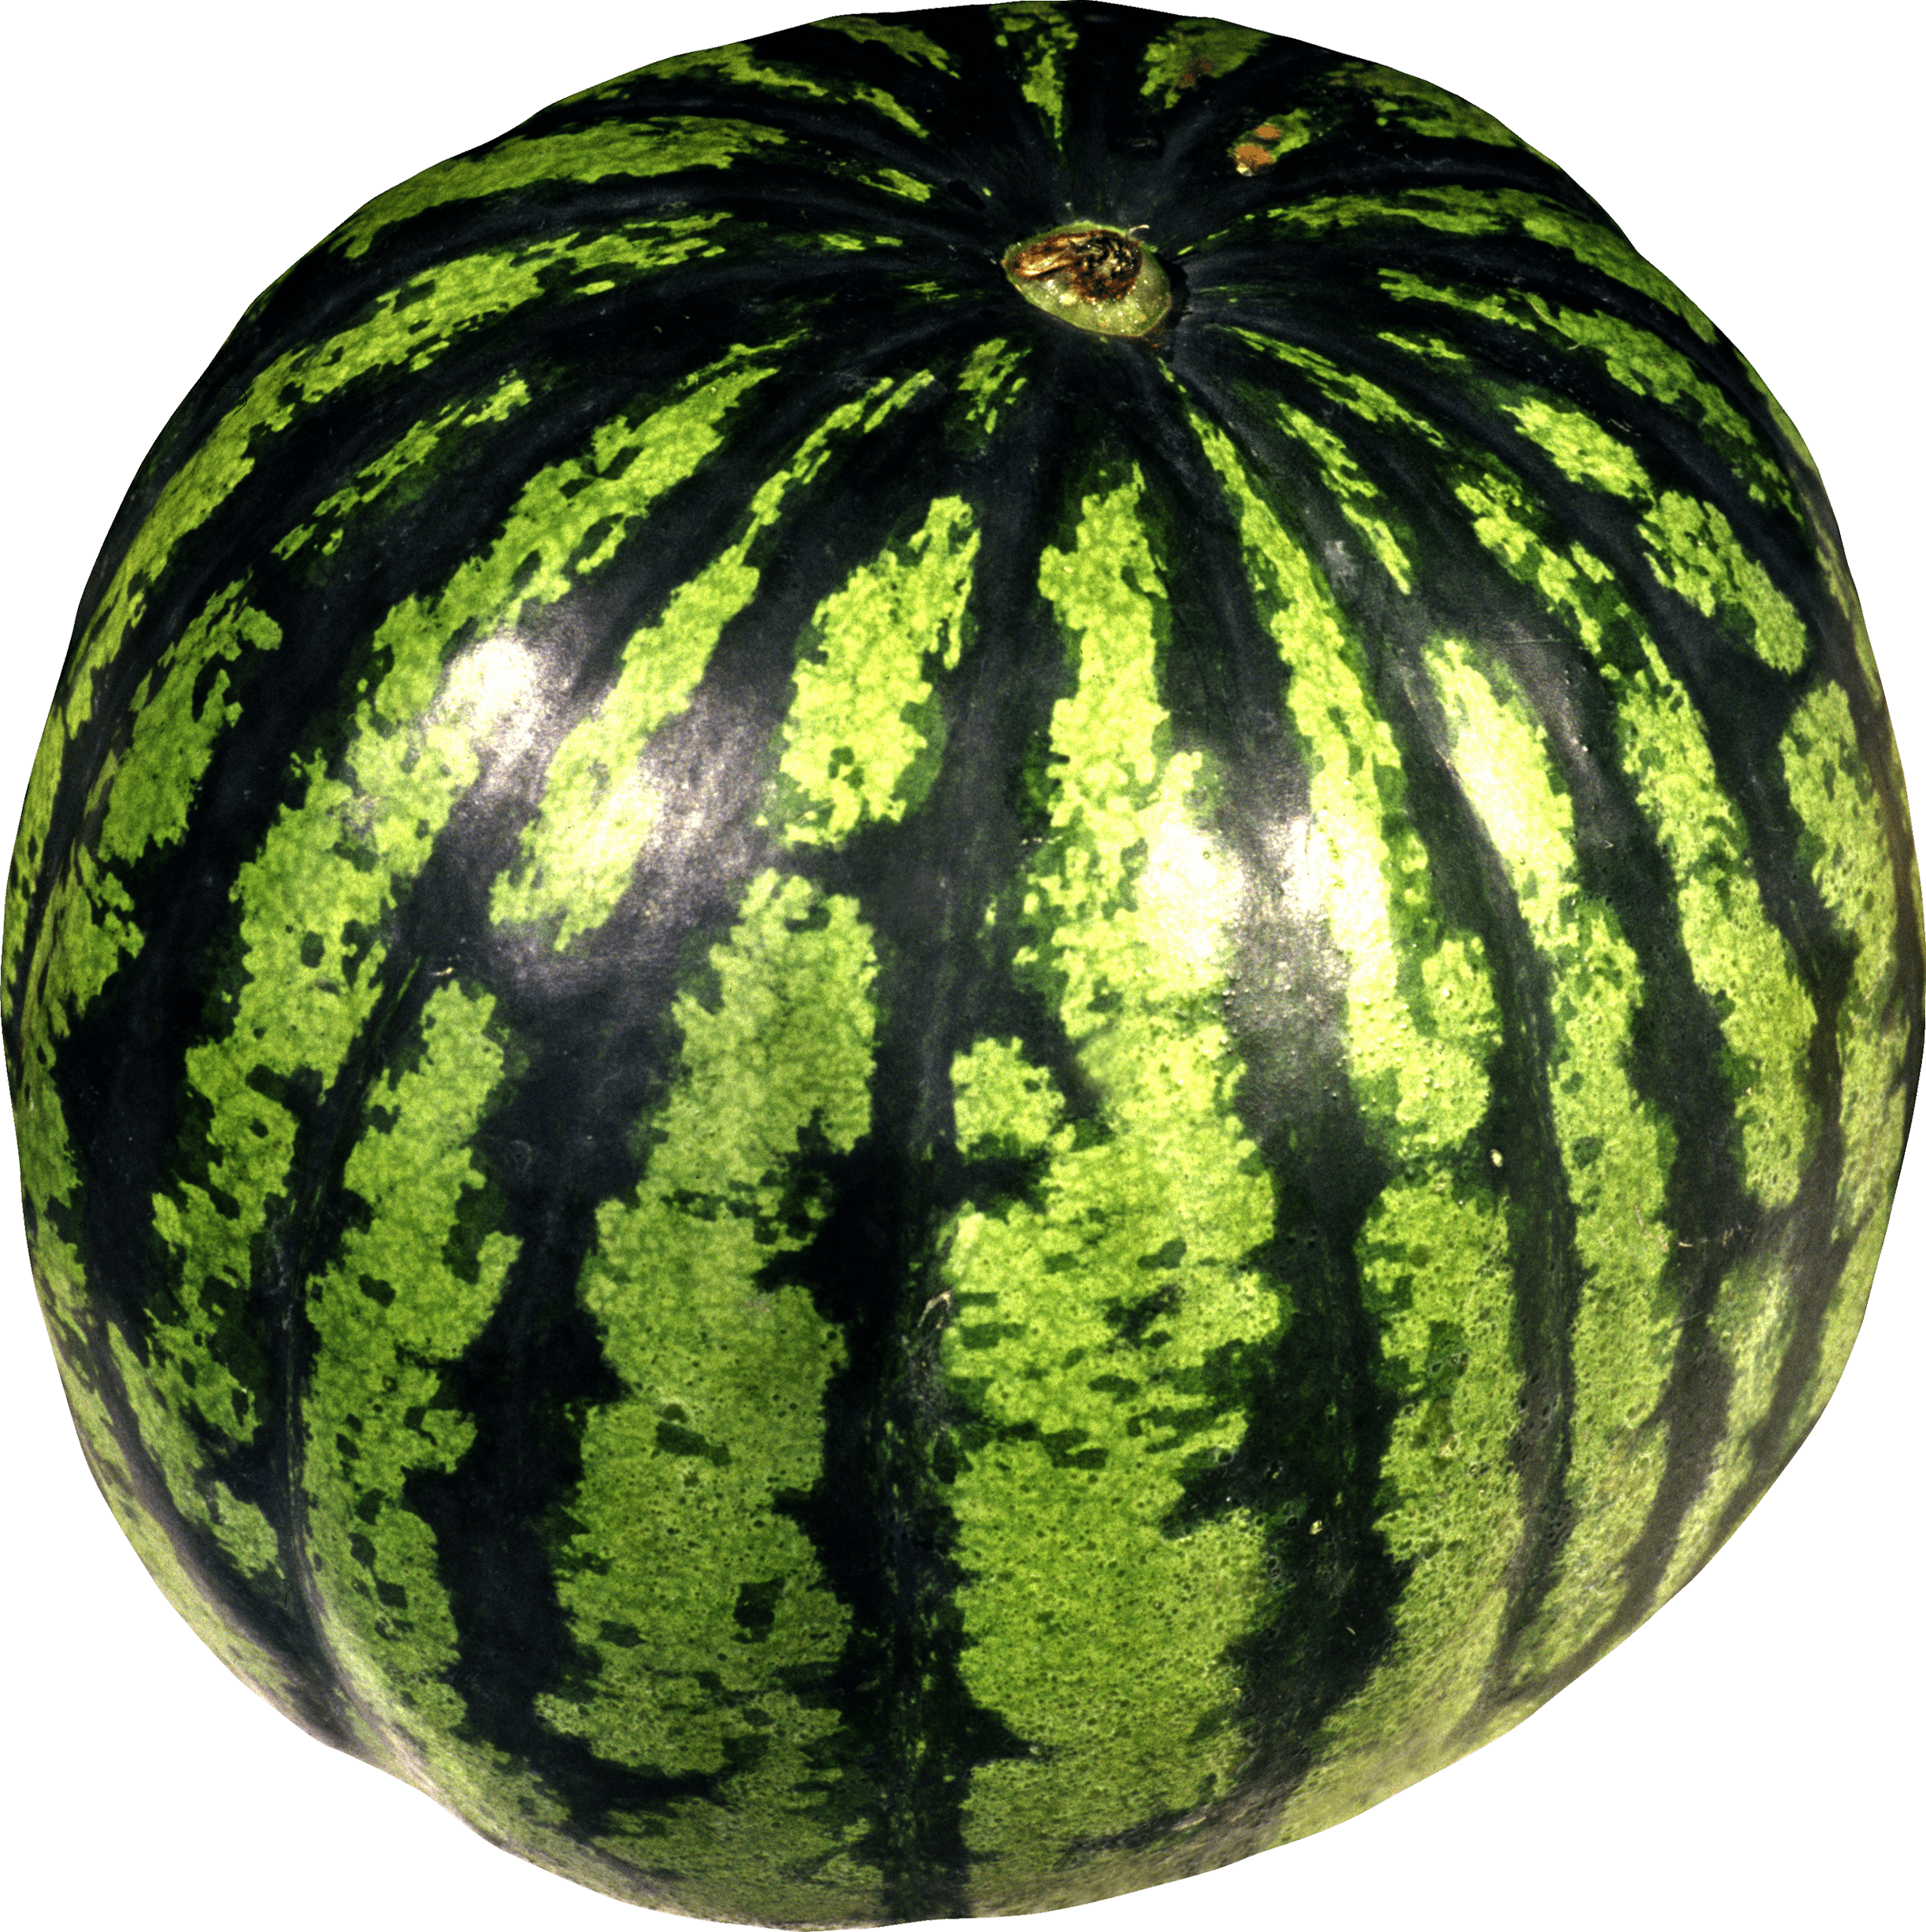 Watermelon Slice PNG File